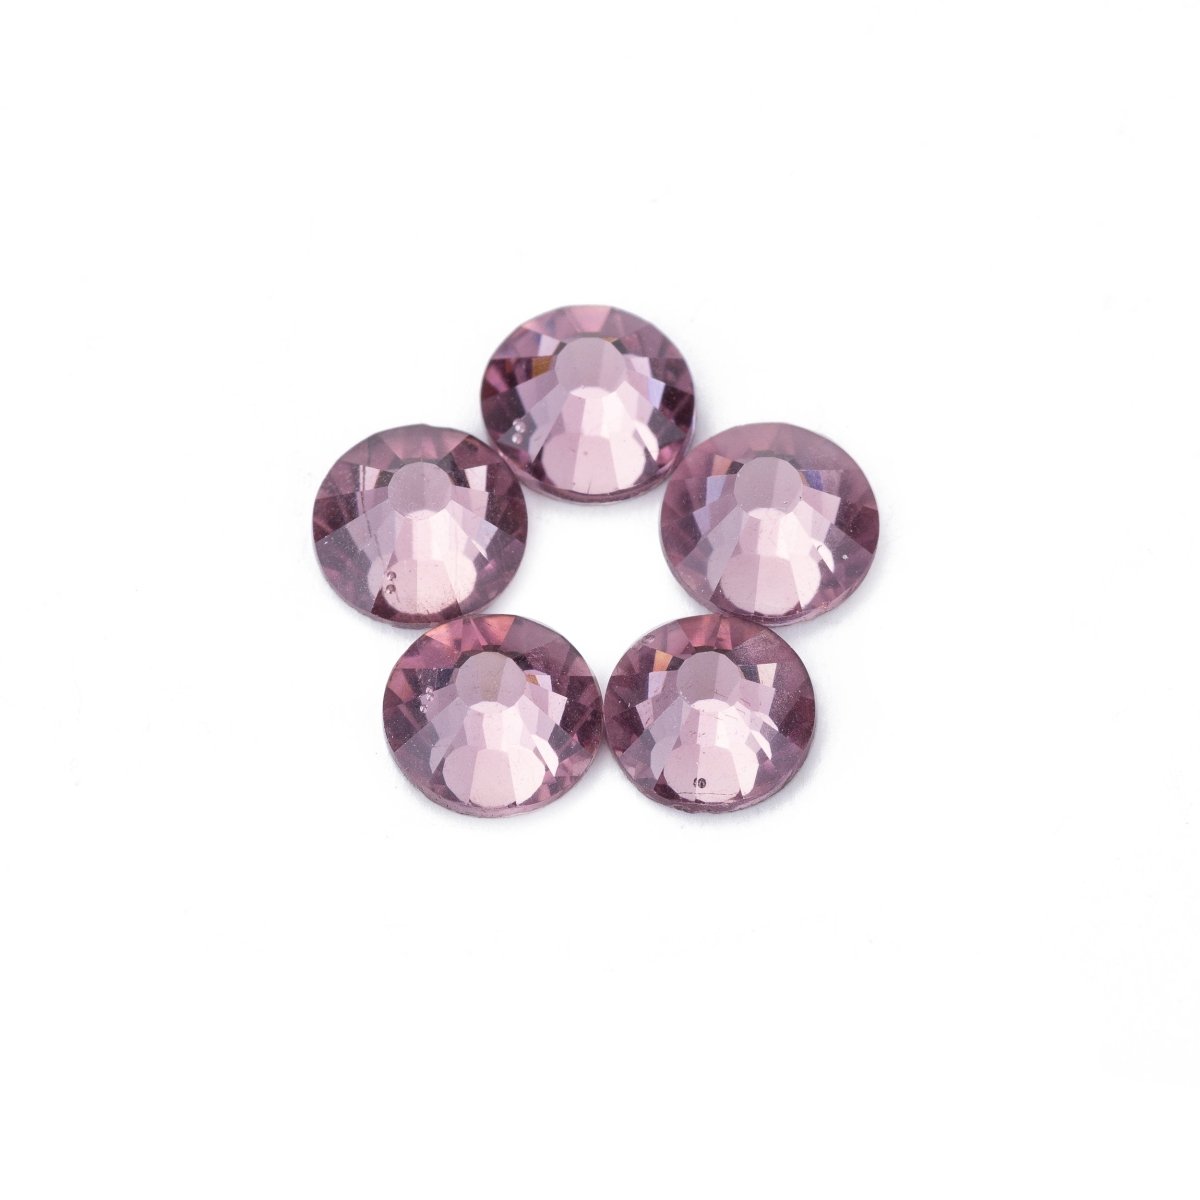 1440 pcs High Quality Crystal Light Amethyst Purple Rhinestones loose Crystal flat back No Hot Fix glass bead Size ss10 / ss12 / ss16 / ss20, 1440-SS20-LTAMETHYST - DLUXCA